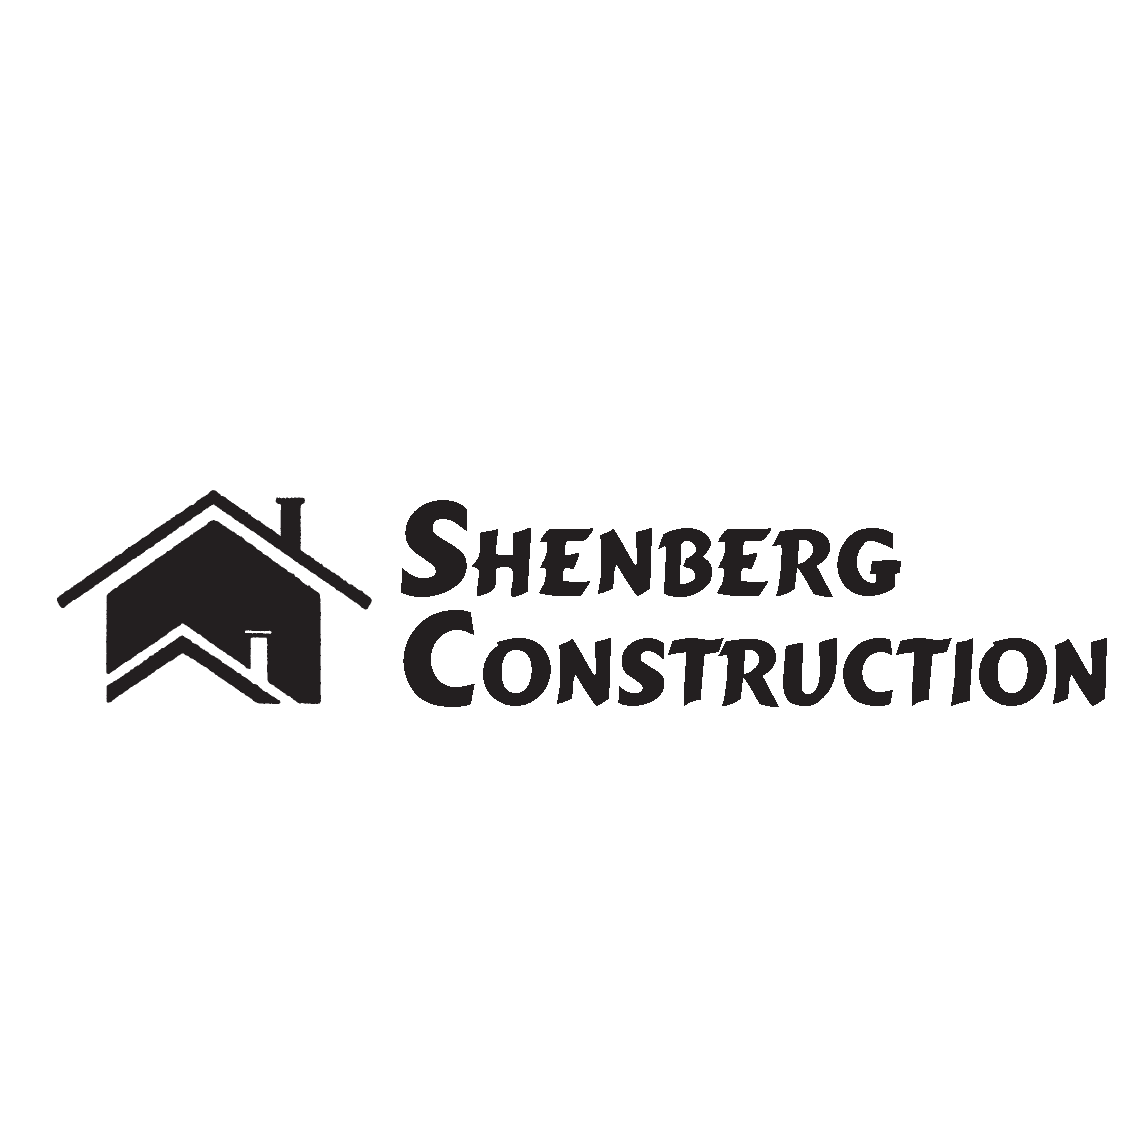 Shenberg Construction - Morris, IL 60450 - (815)931-5770 | ShowMeLocal.com